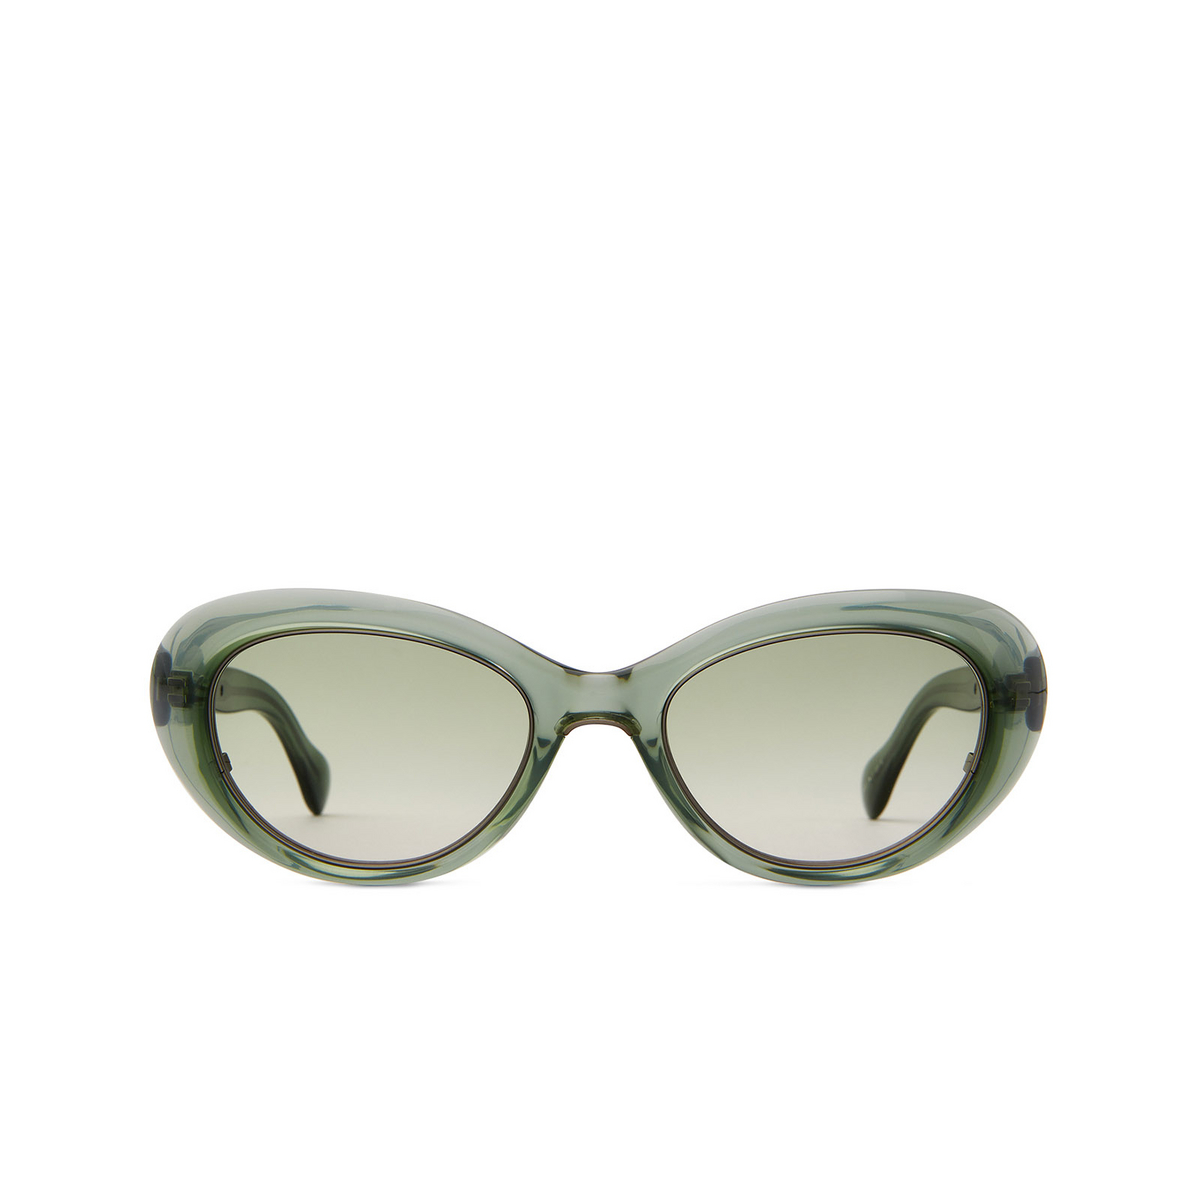 Mr. Leight SELMA S Sunglasses EU/RAIG Eucalyptus - front view